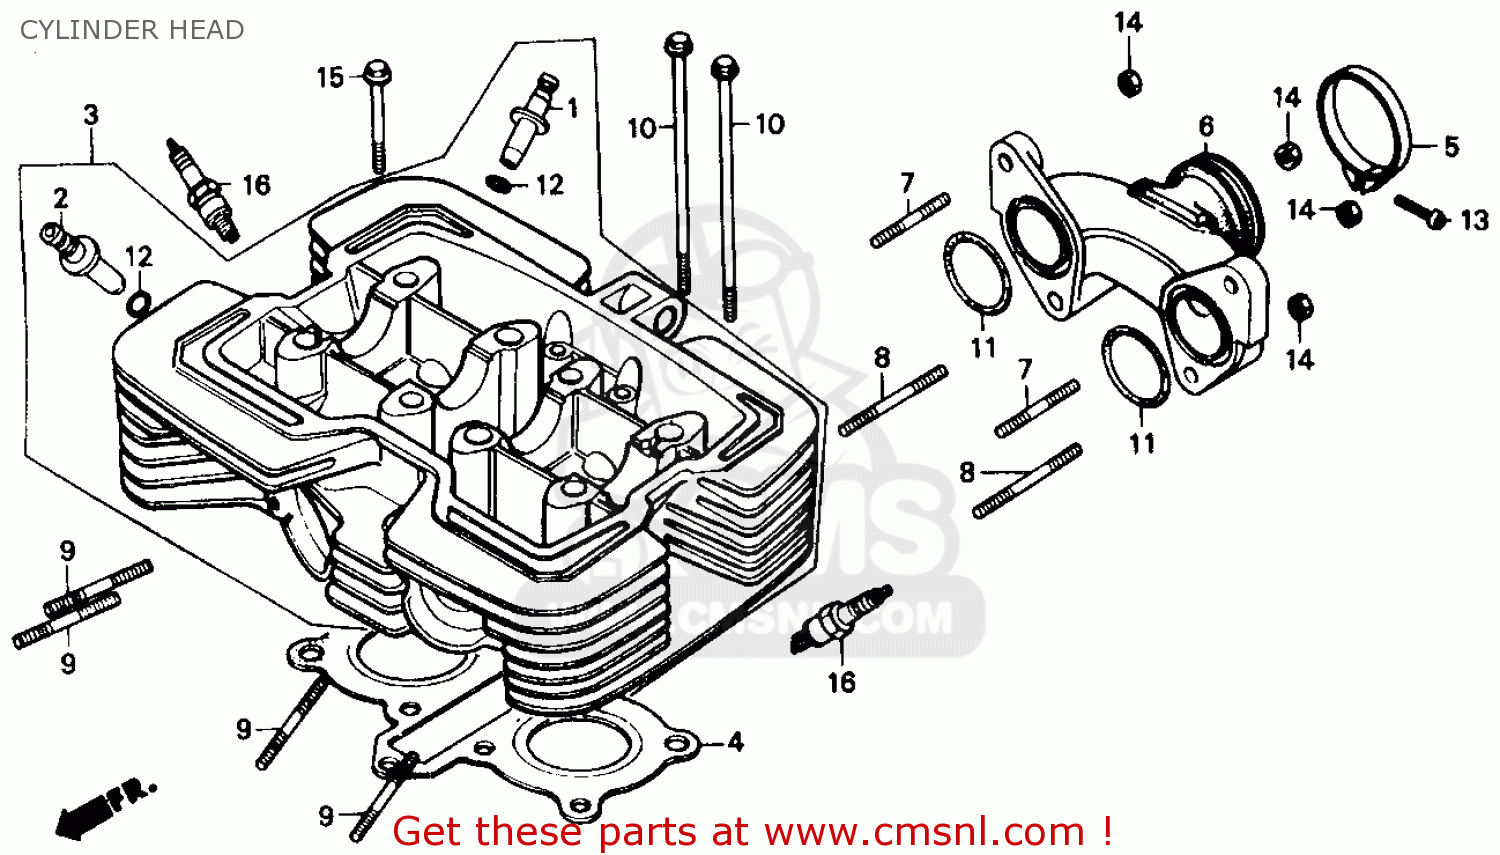 1985 Honda rebel valve adjustment #1